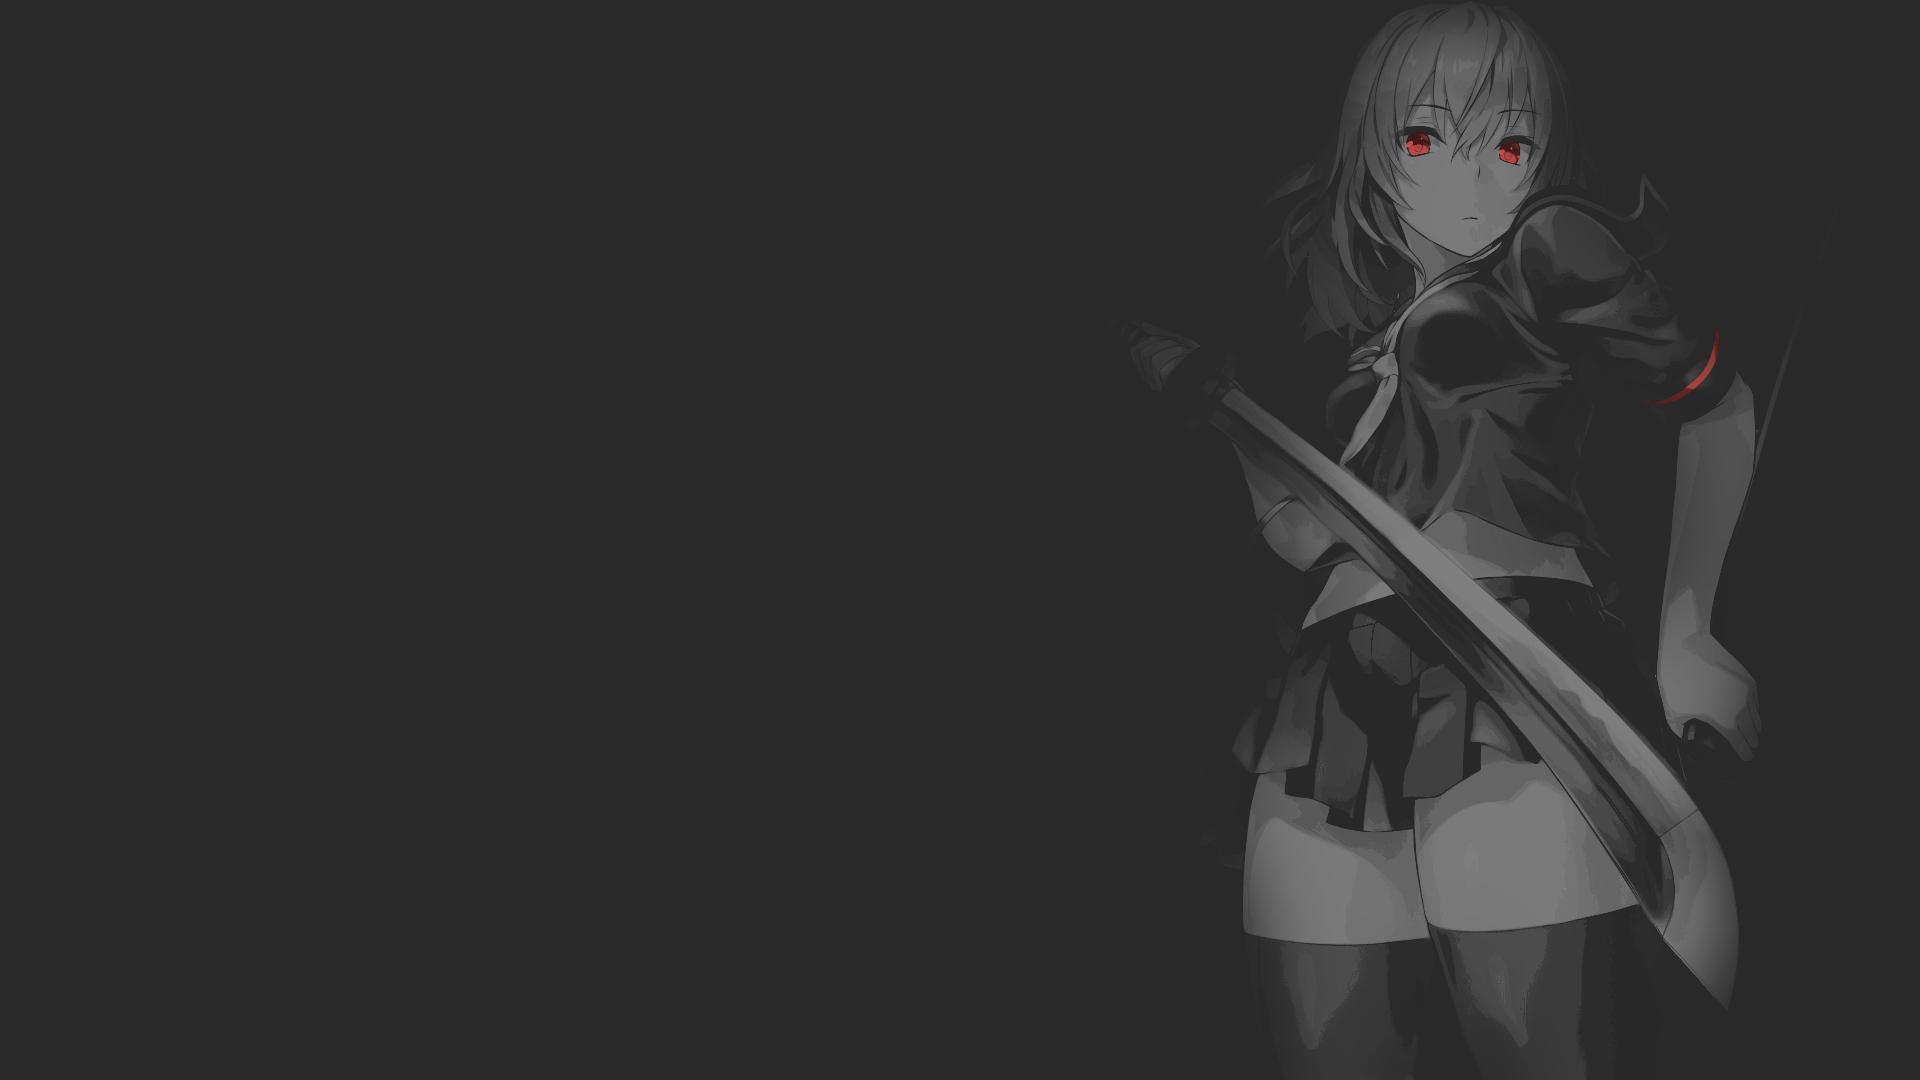 #red, #white, #sword, #black, #dark, #anime girls, #blades